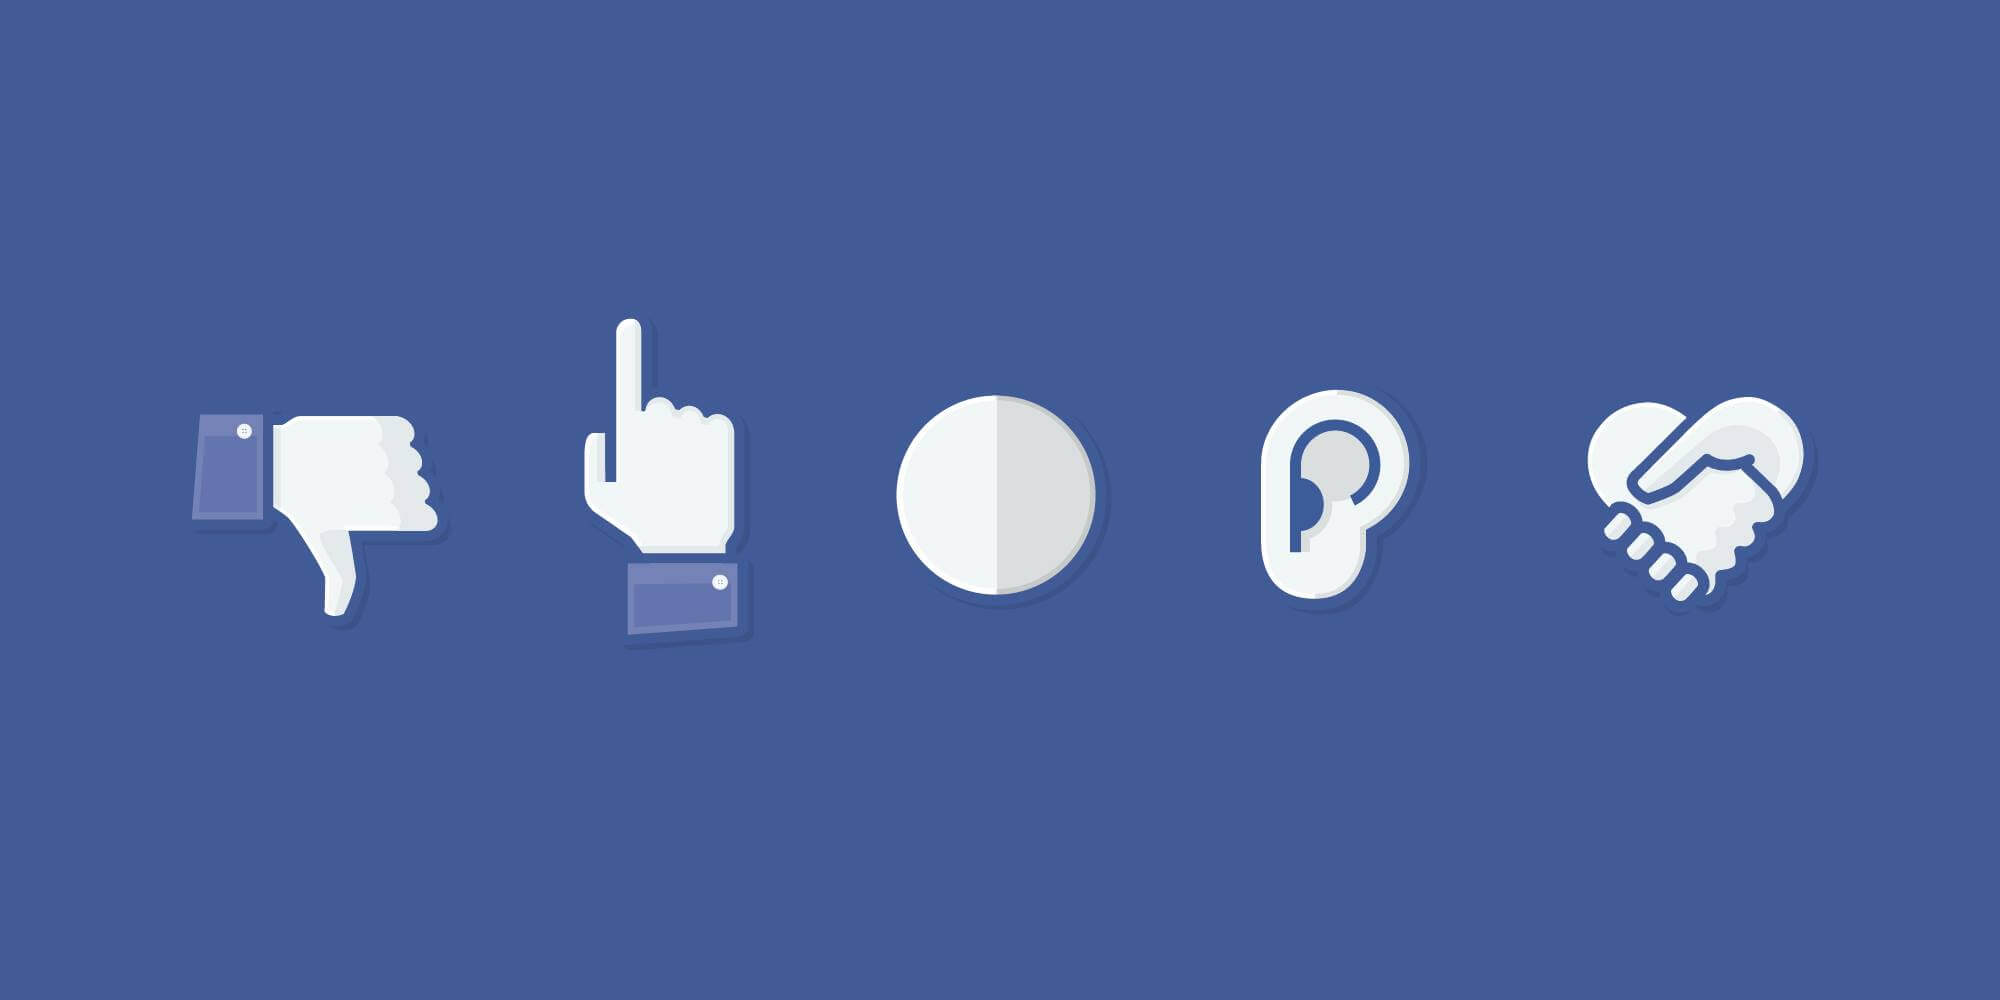 facebook là gì, sử dụng facebook hiệu quả, quảng cáo facebook, quảng cáo facebook hiệu quảng, mạng xã hội facebook